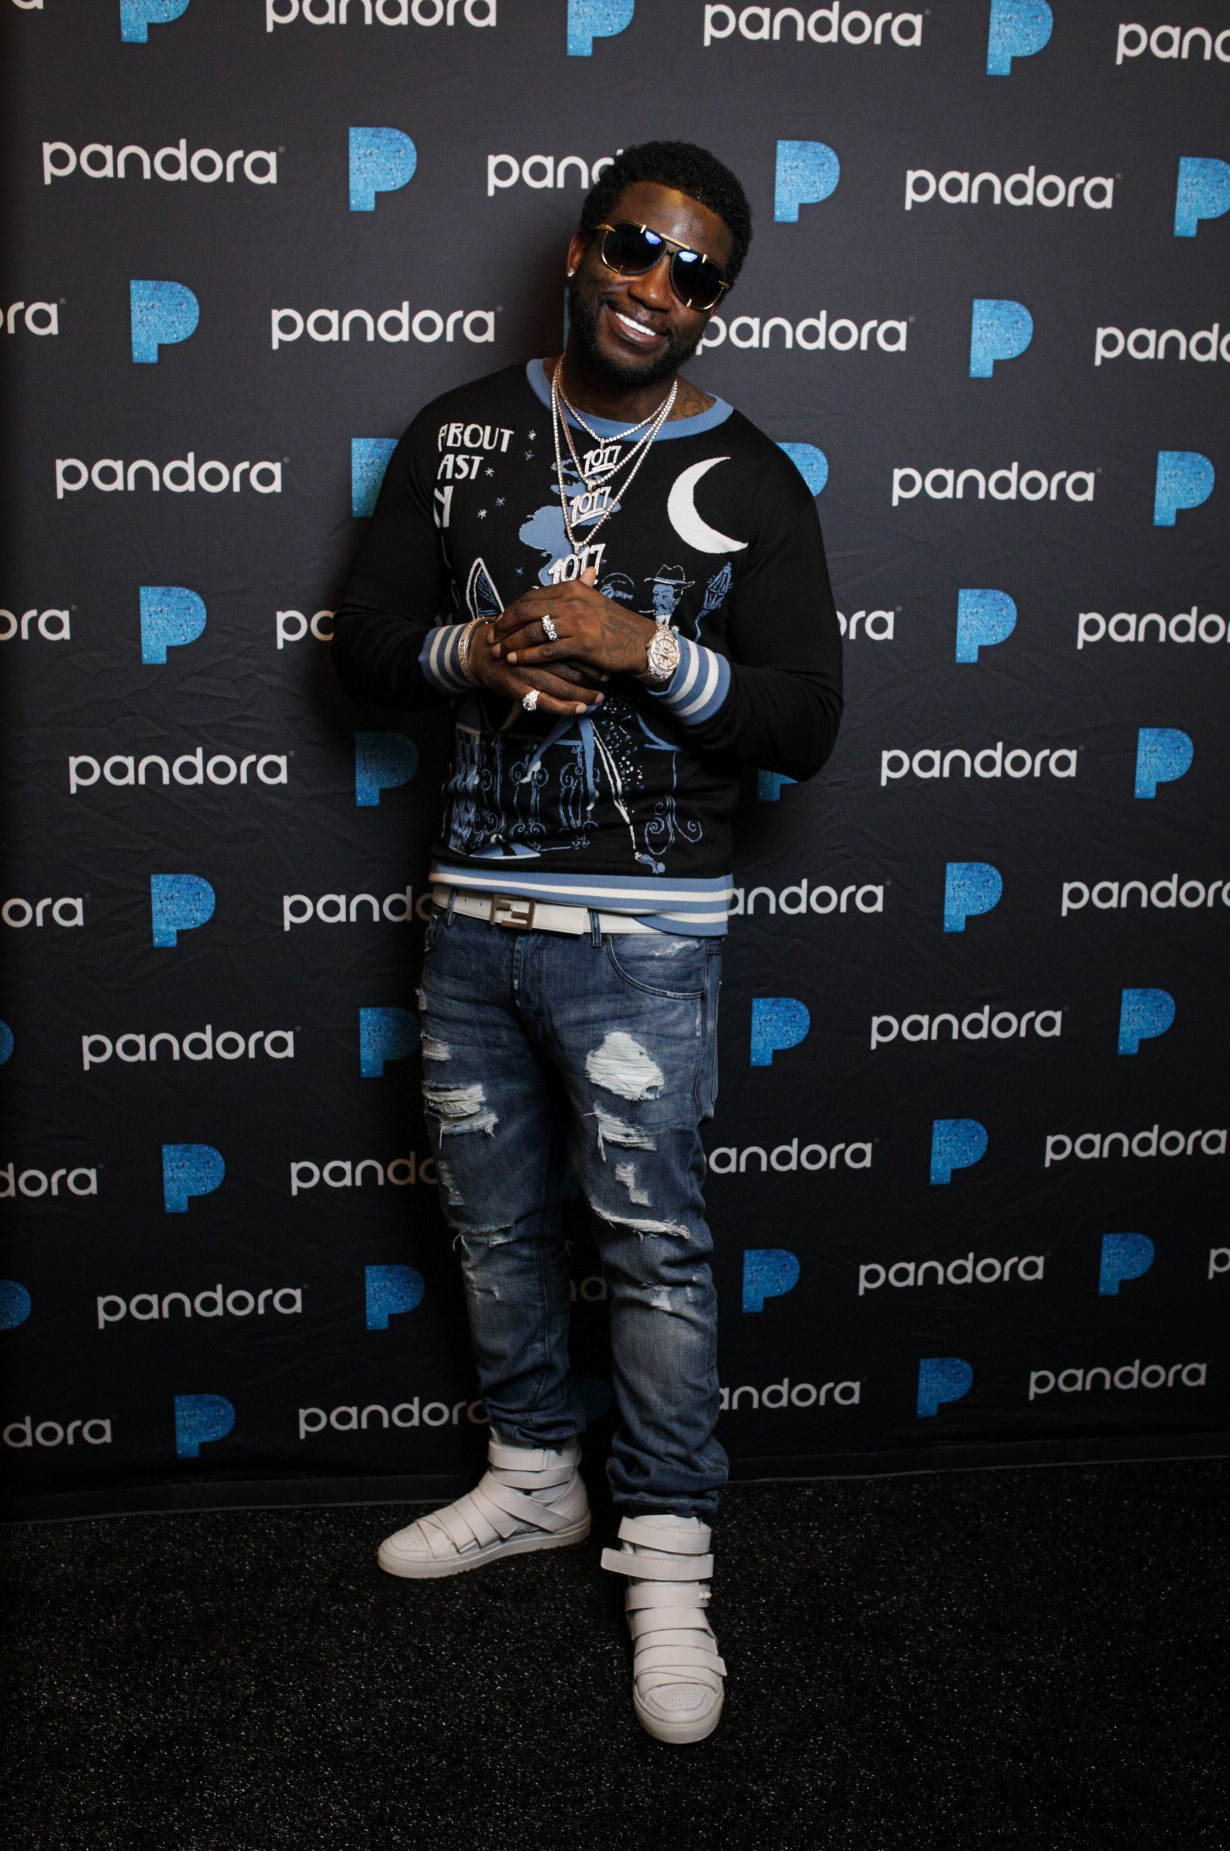 Gucci Mane Pandora.jpg